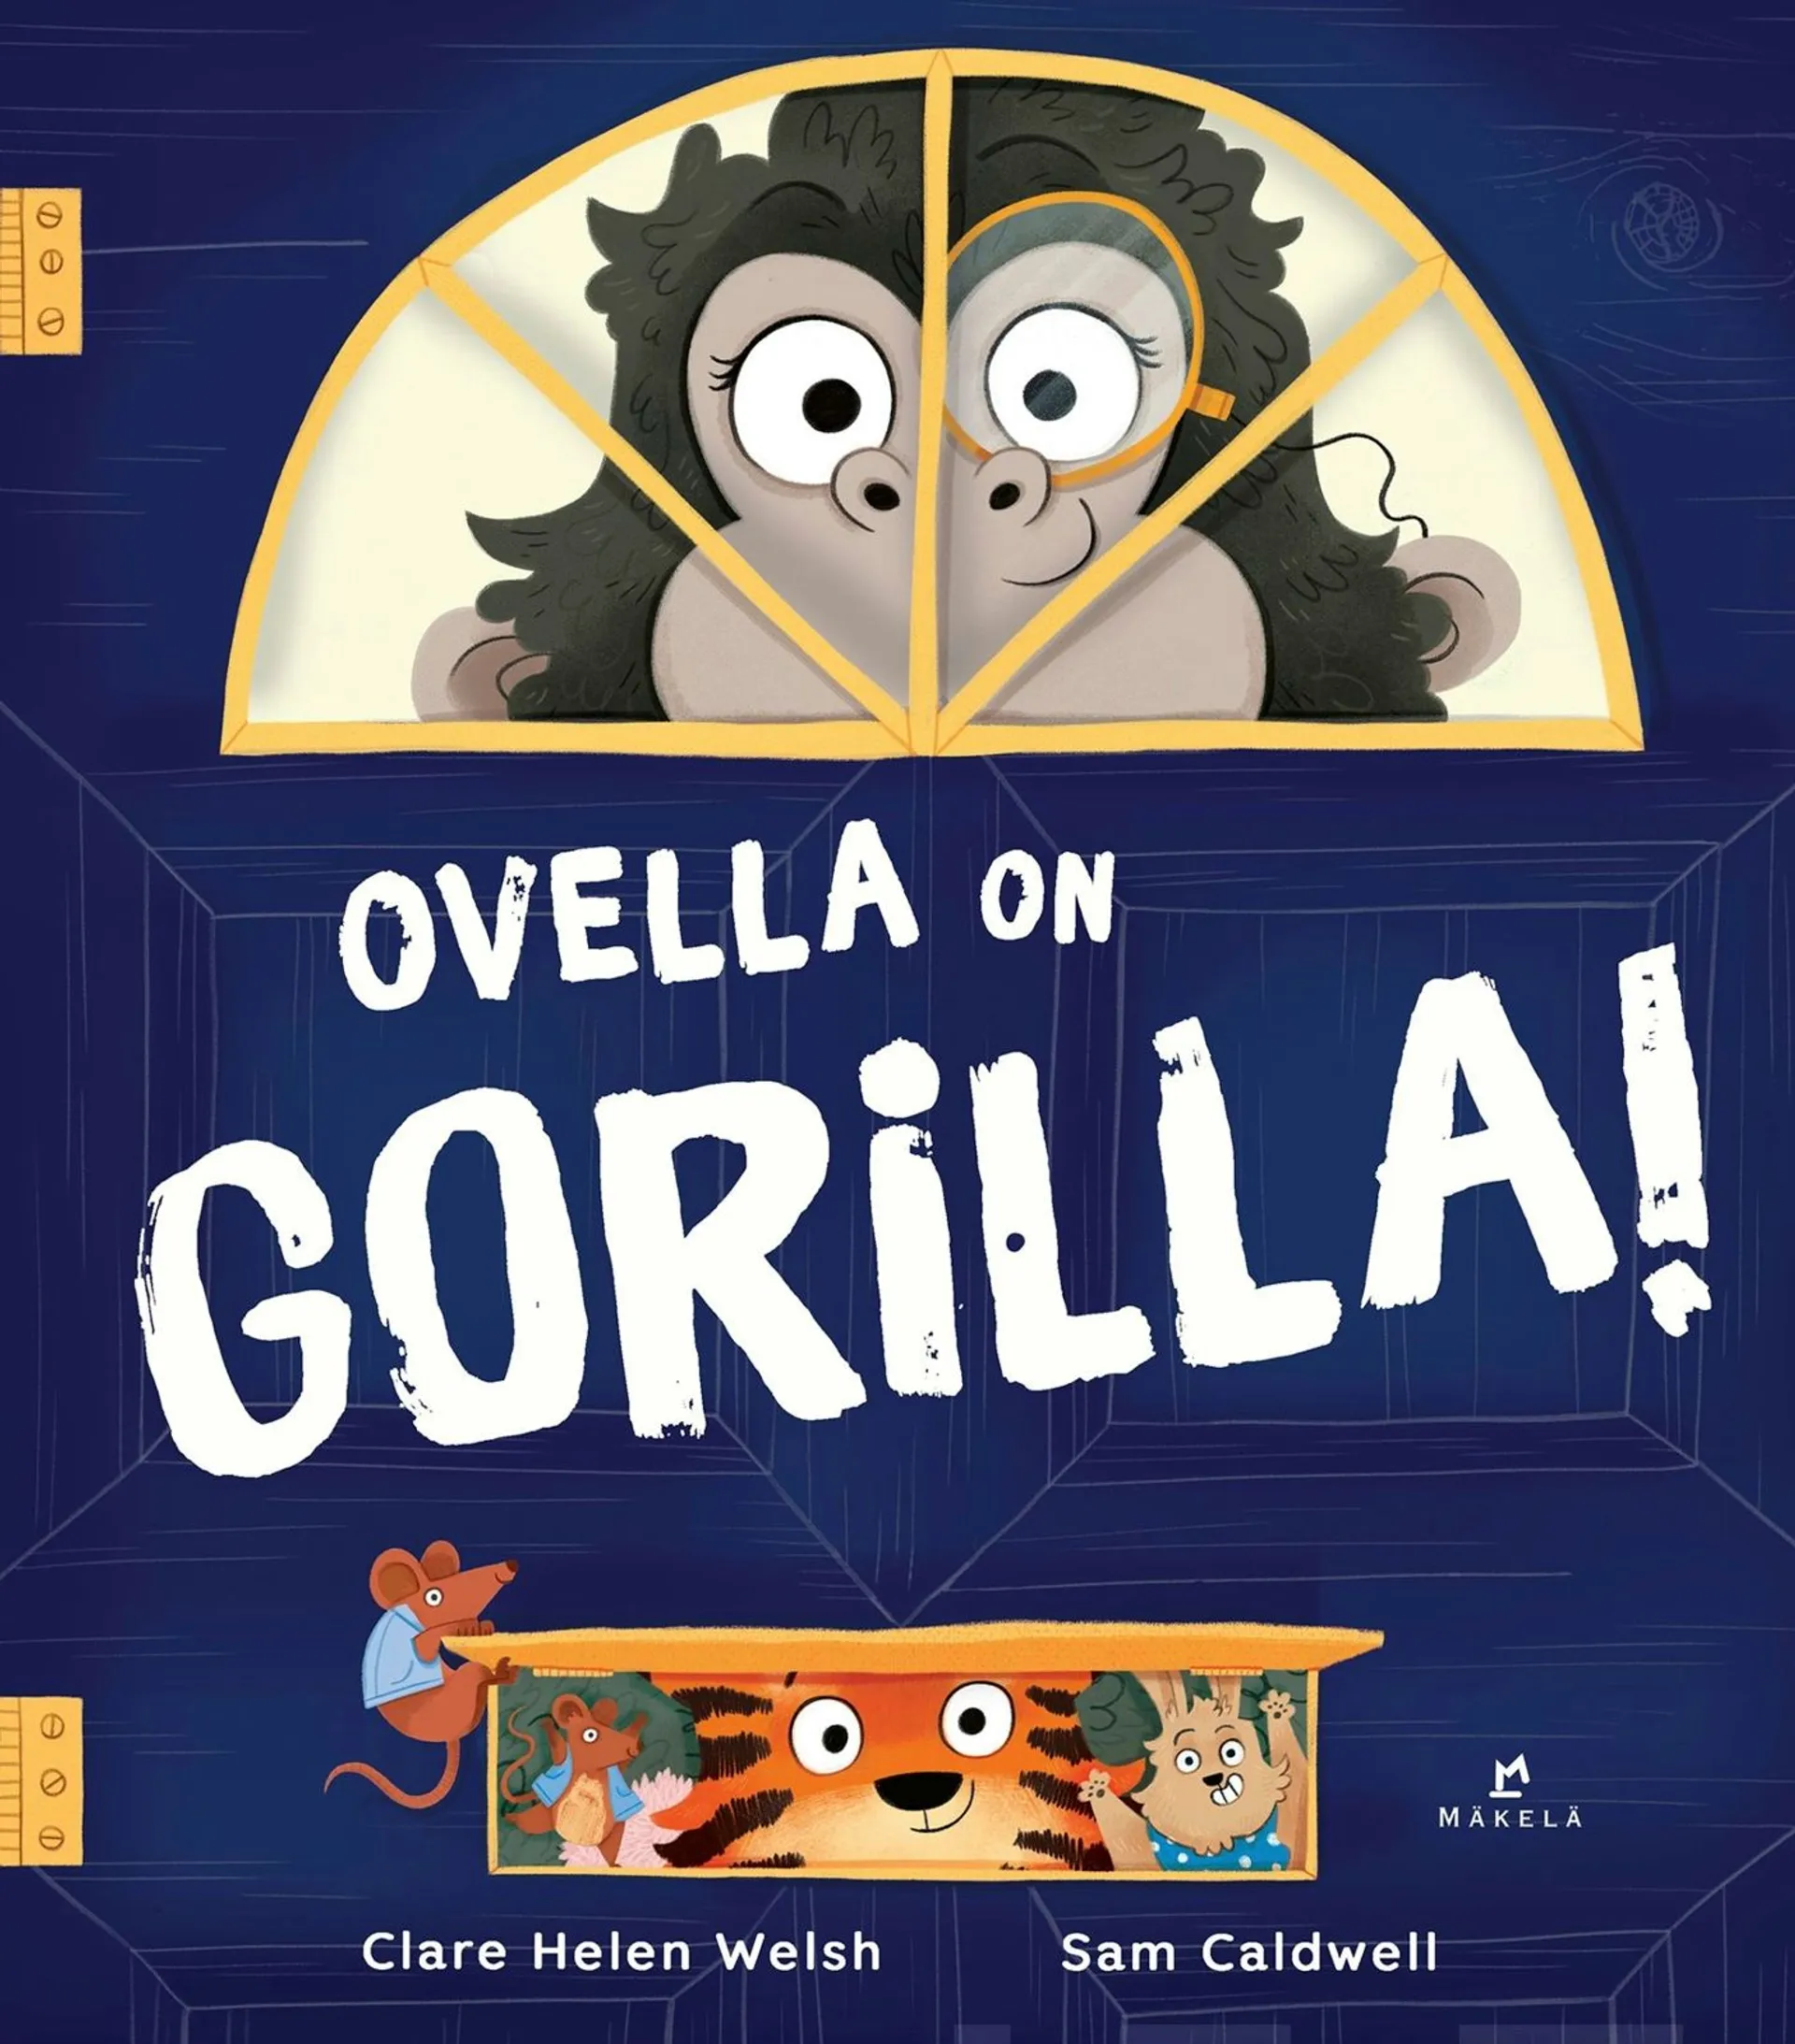 Welsh, Ovella on gorilla!